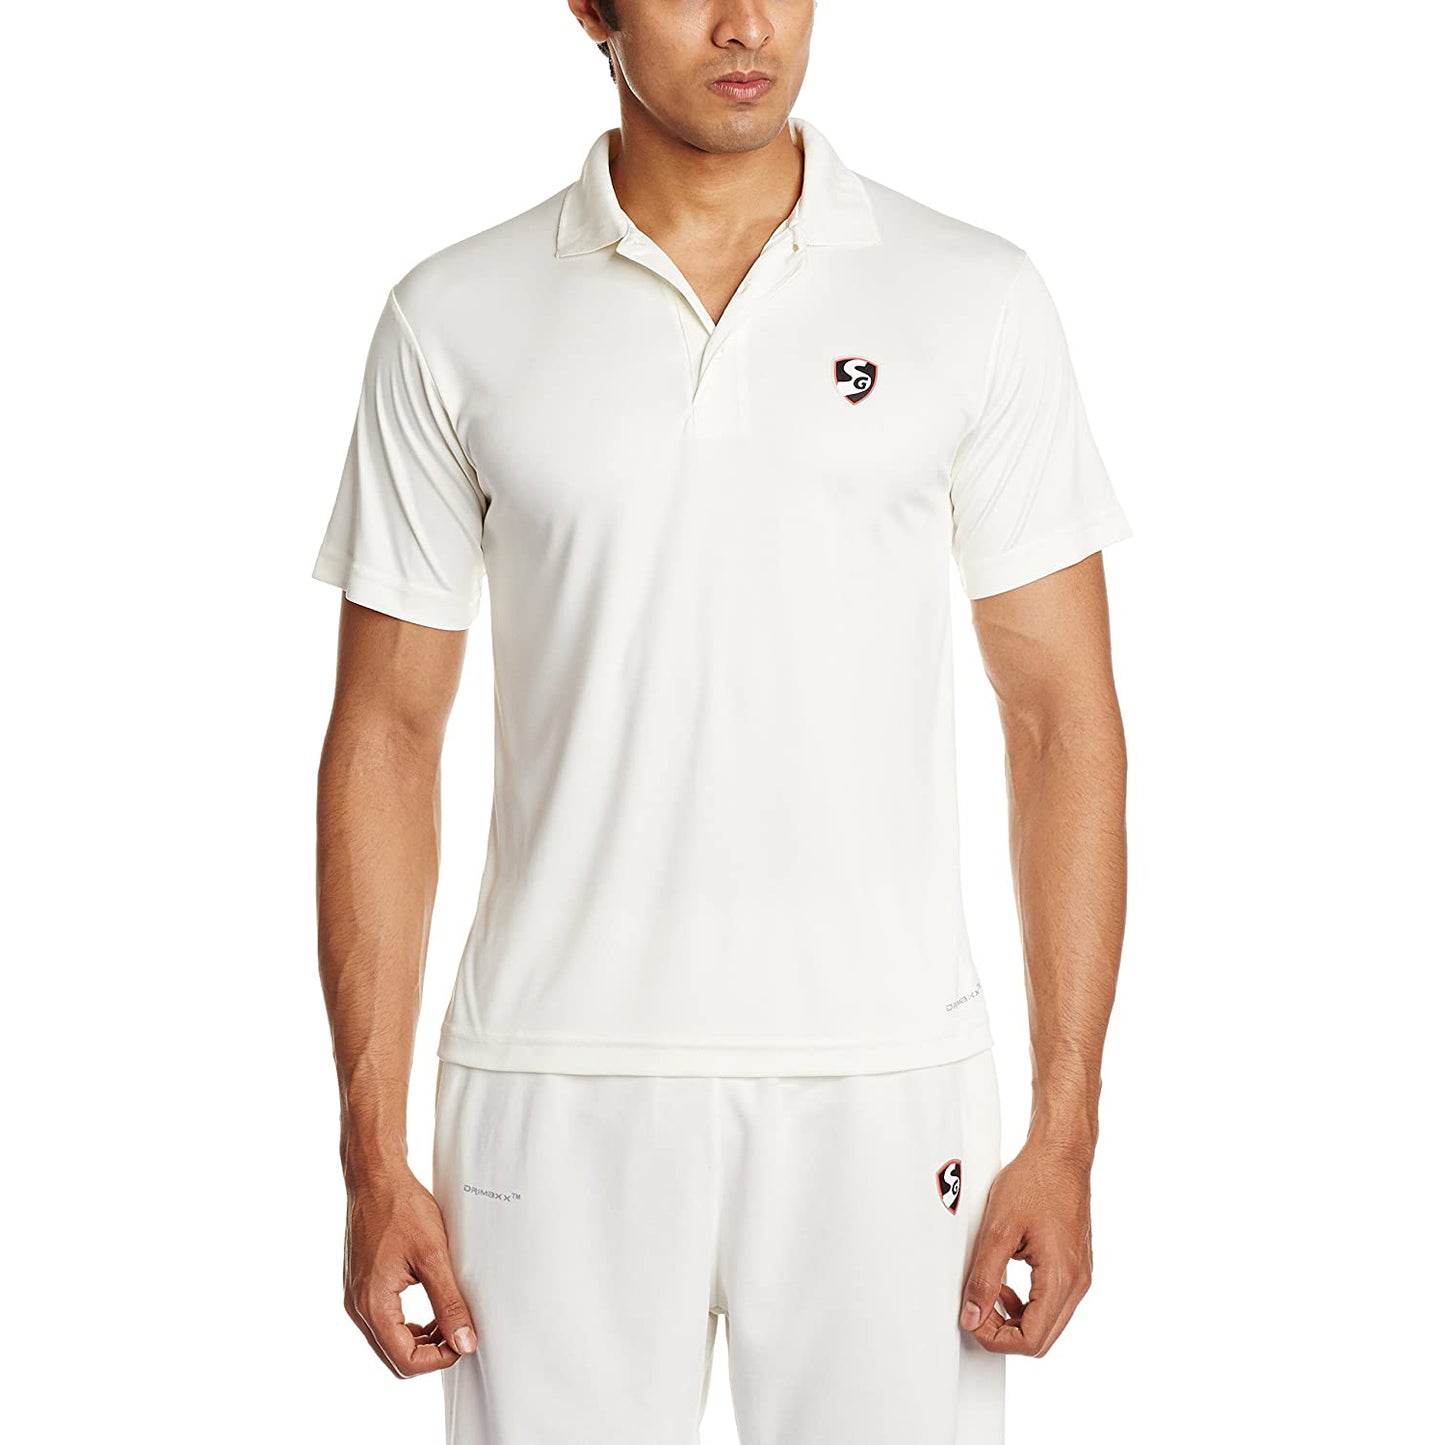 SG Club Cricket T-shirt, Half Sleeves - Best Price online Prokicksports.com